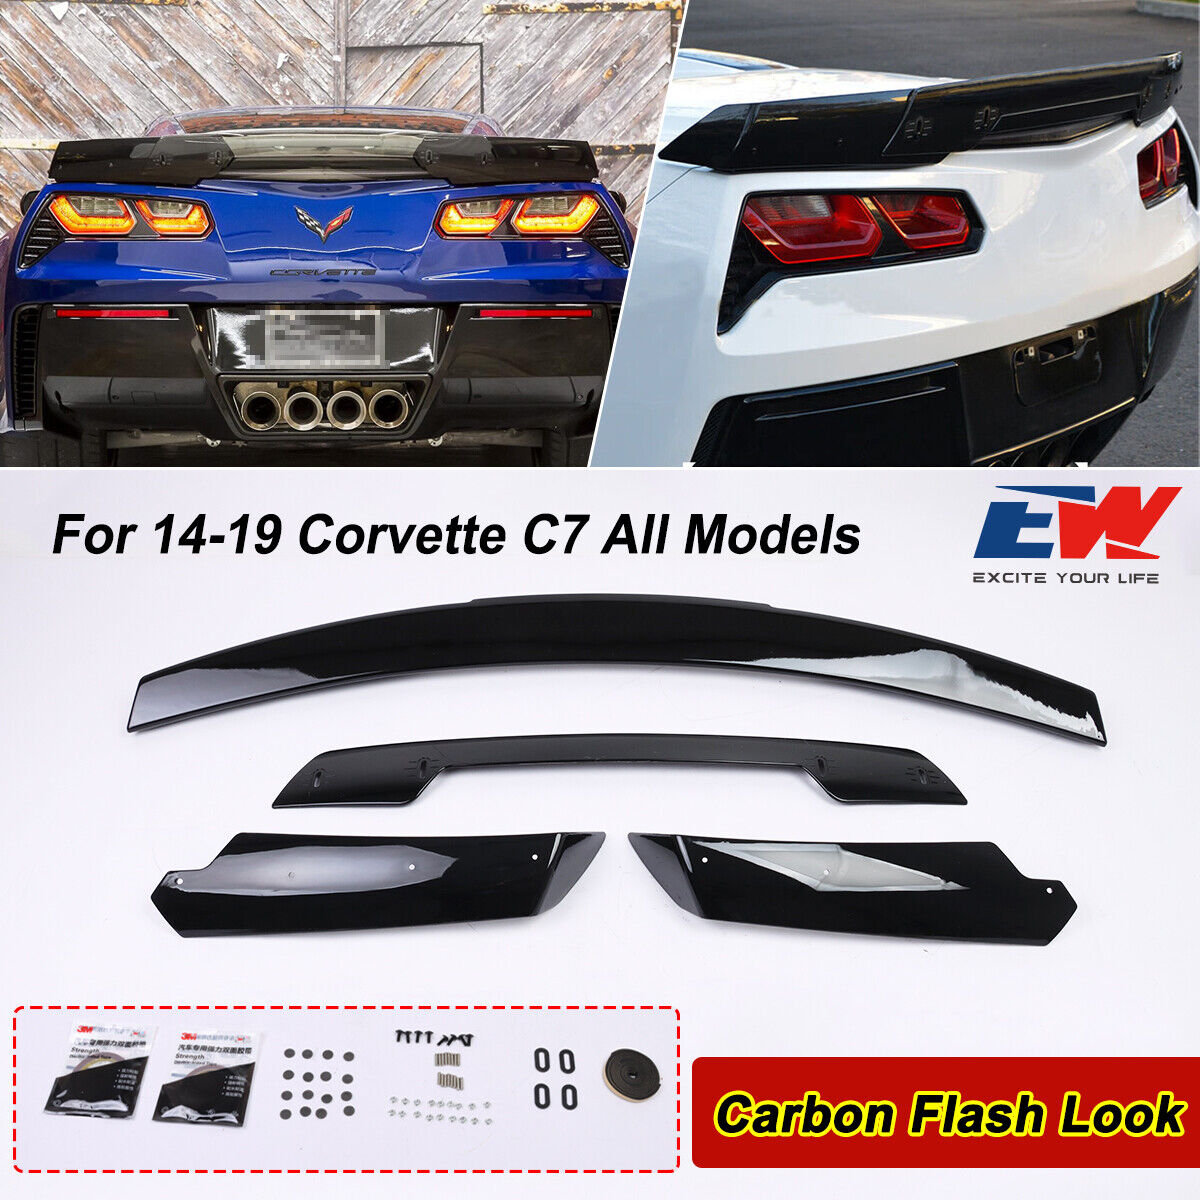 For 14-19 Corvette C7 Z06 Stage 3 Rear Trunk Lid Spoiler Carbon Flash Wickerbill